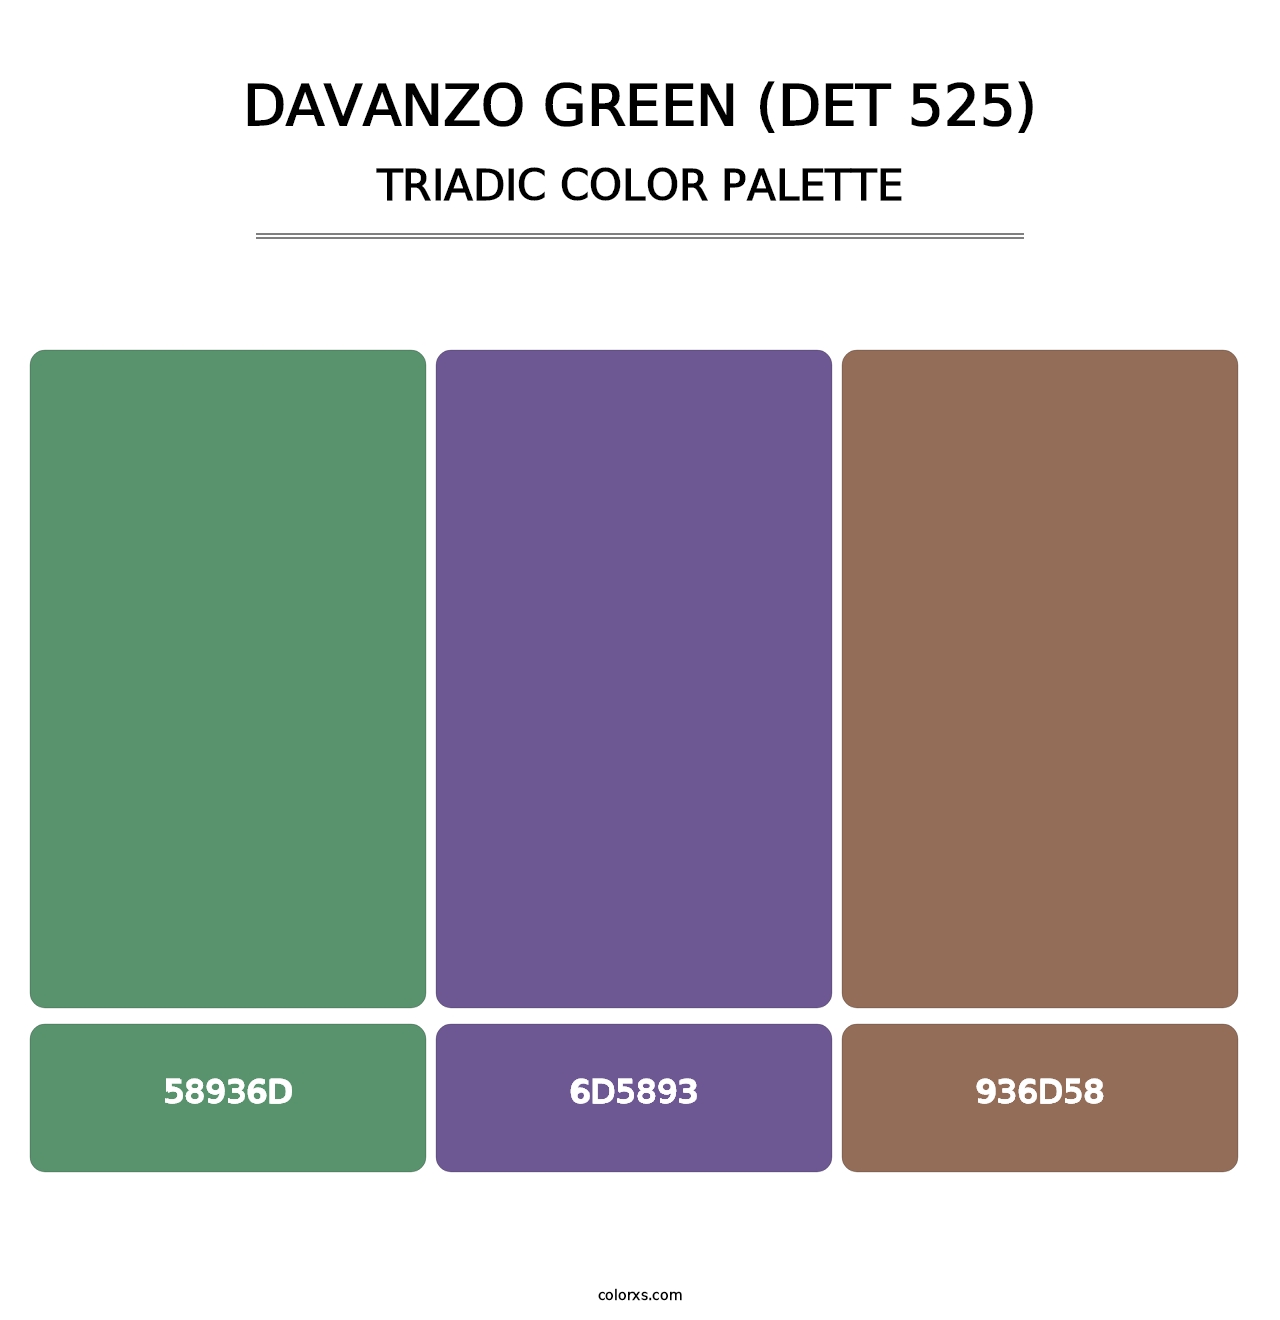 DaVanzo Green (DET 525) - Triadic Color Palette